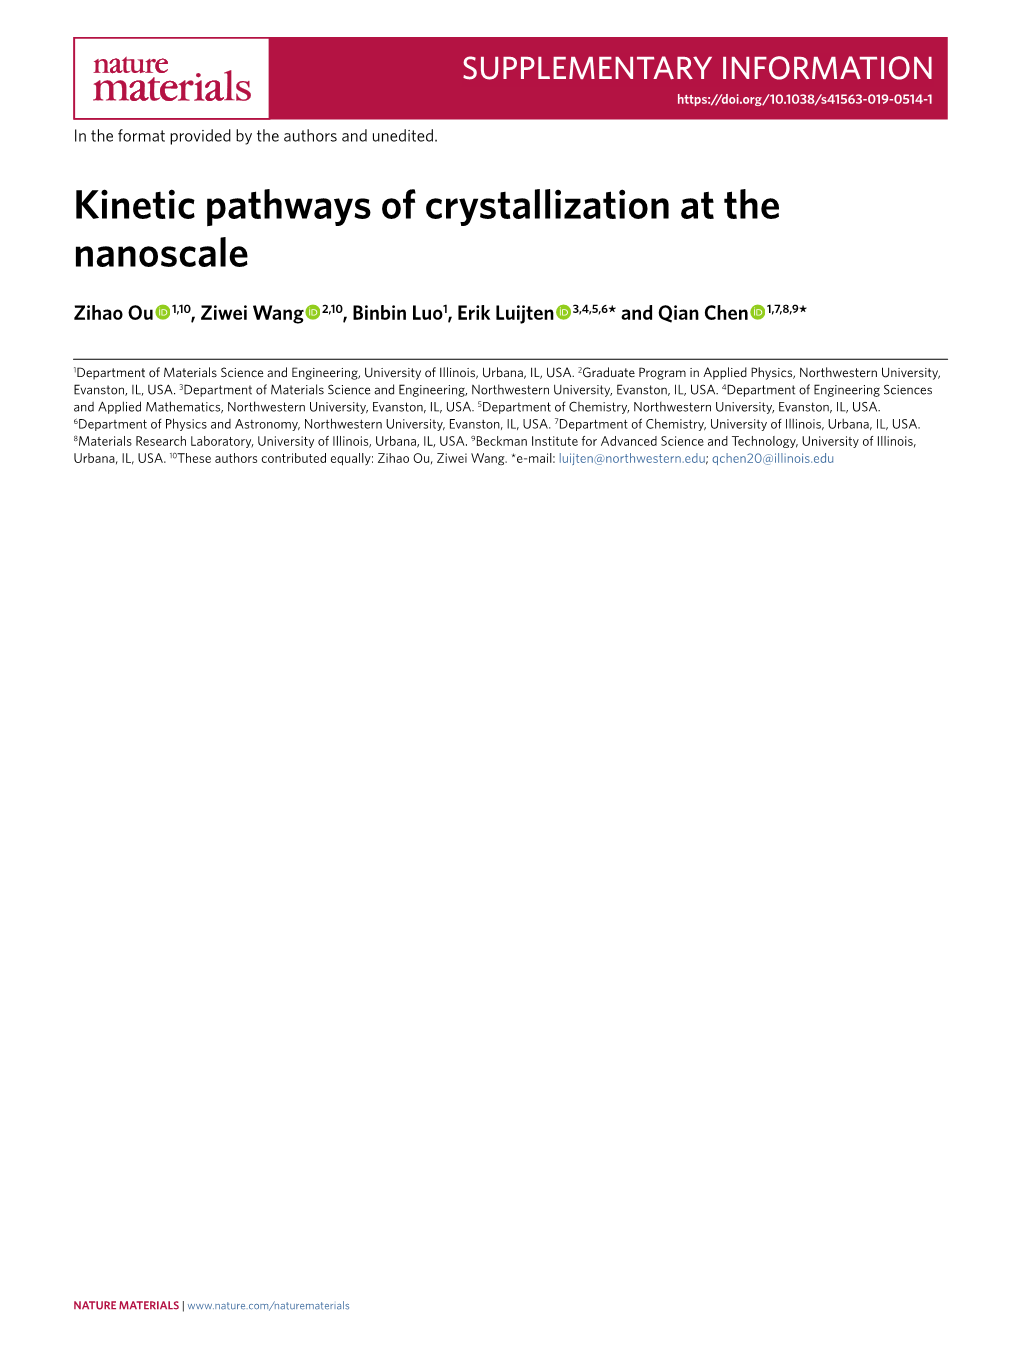 Kinetic Pathways of Crystallization at the Nanoscale